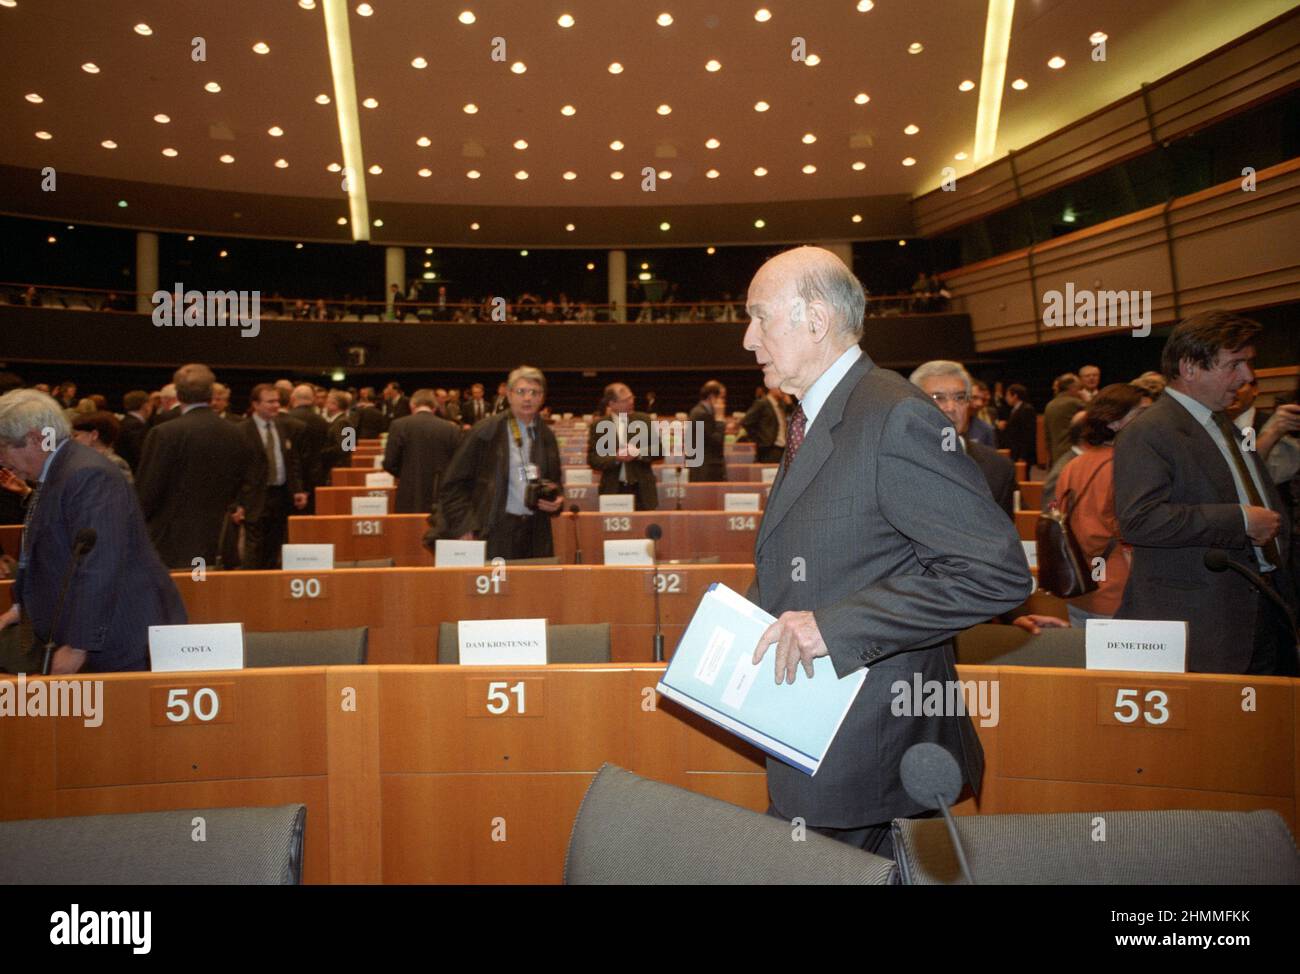 Belgio, Bruxelles, il 28 febbraio 2002: Valry Giscard d'Estaing, Presidente della Convenzione europea, partecipa ad una Conferenza sul futuro dell'Europa in cui si doveva concordare un trattato che istituiva una Costituzione per l'Europa. Foto Stock